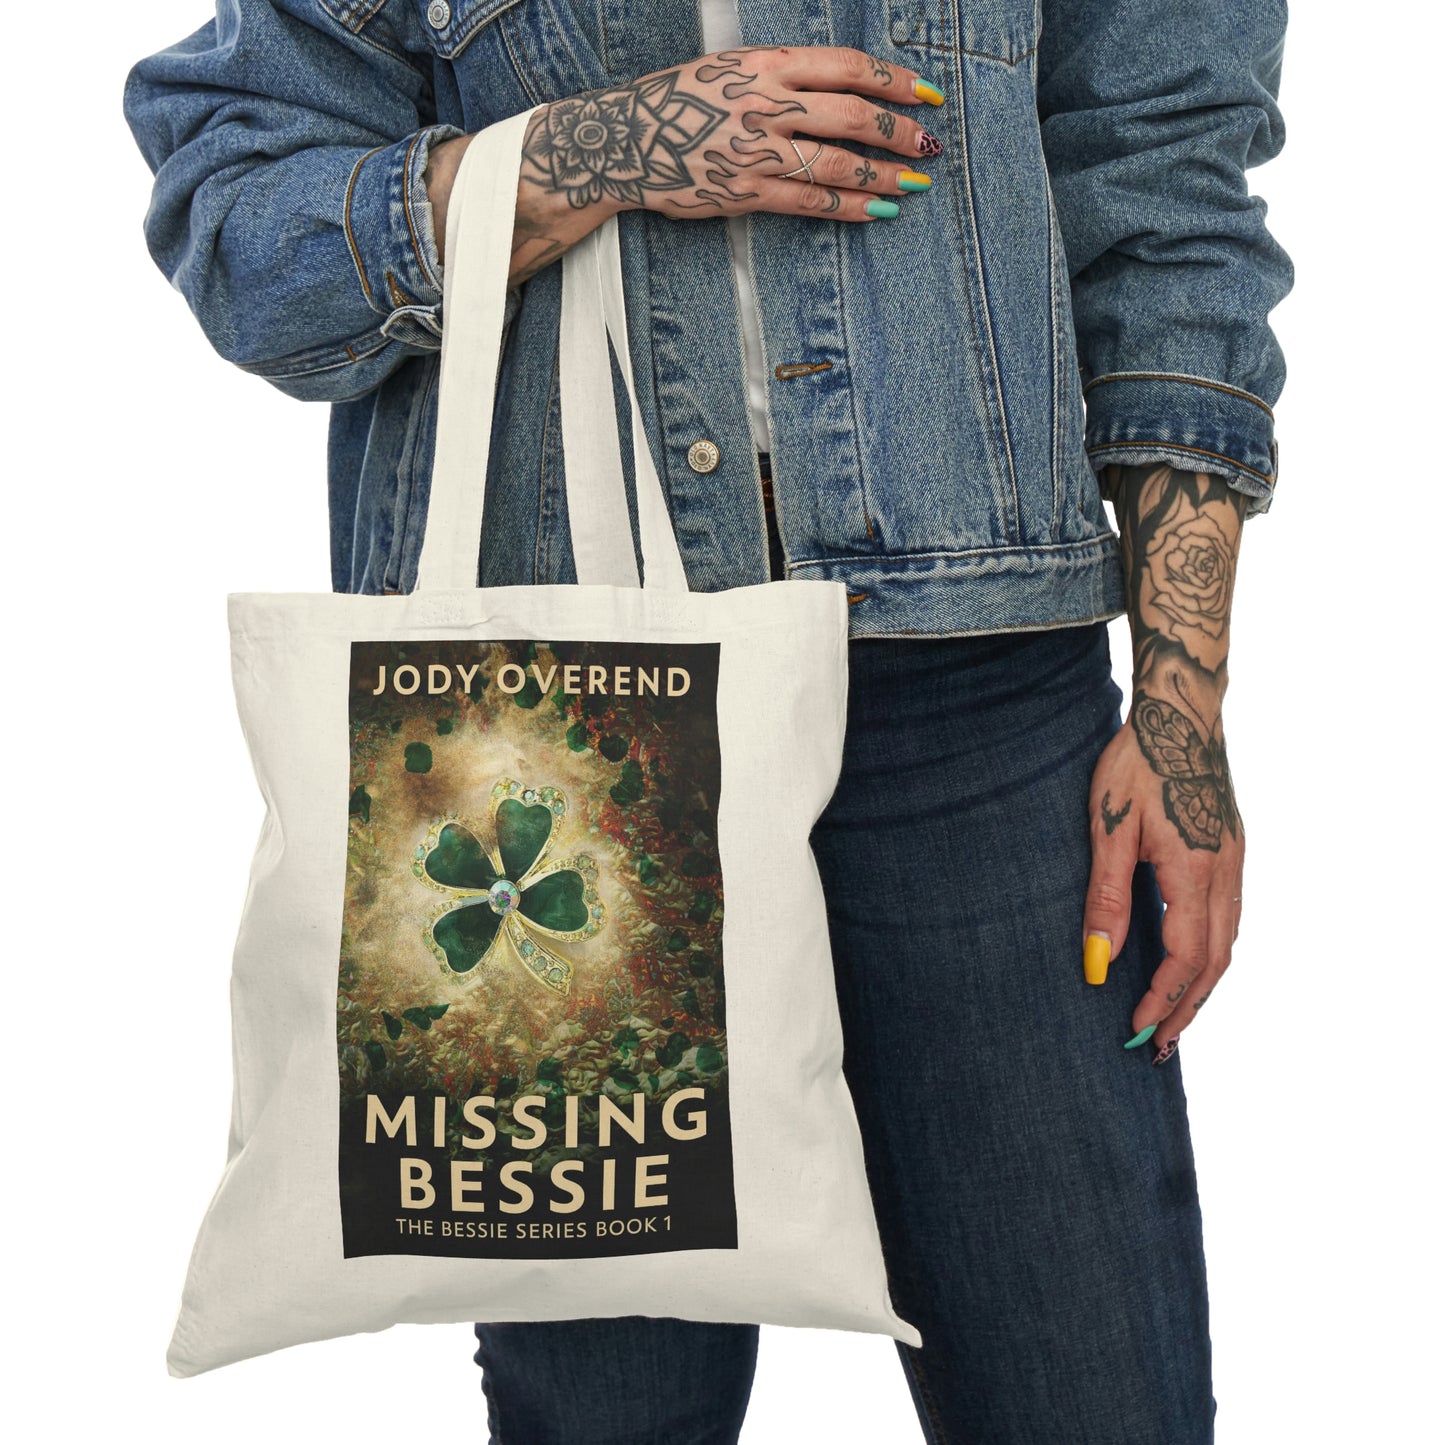 Missing Bessie - Natural Tote Bag